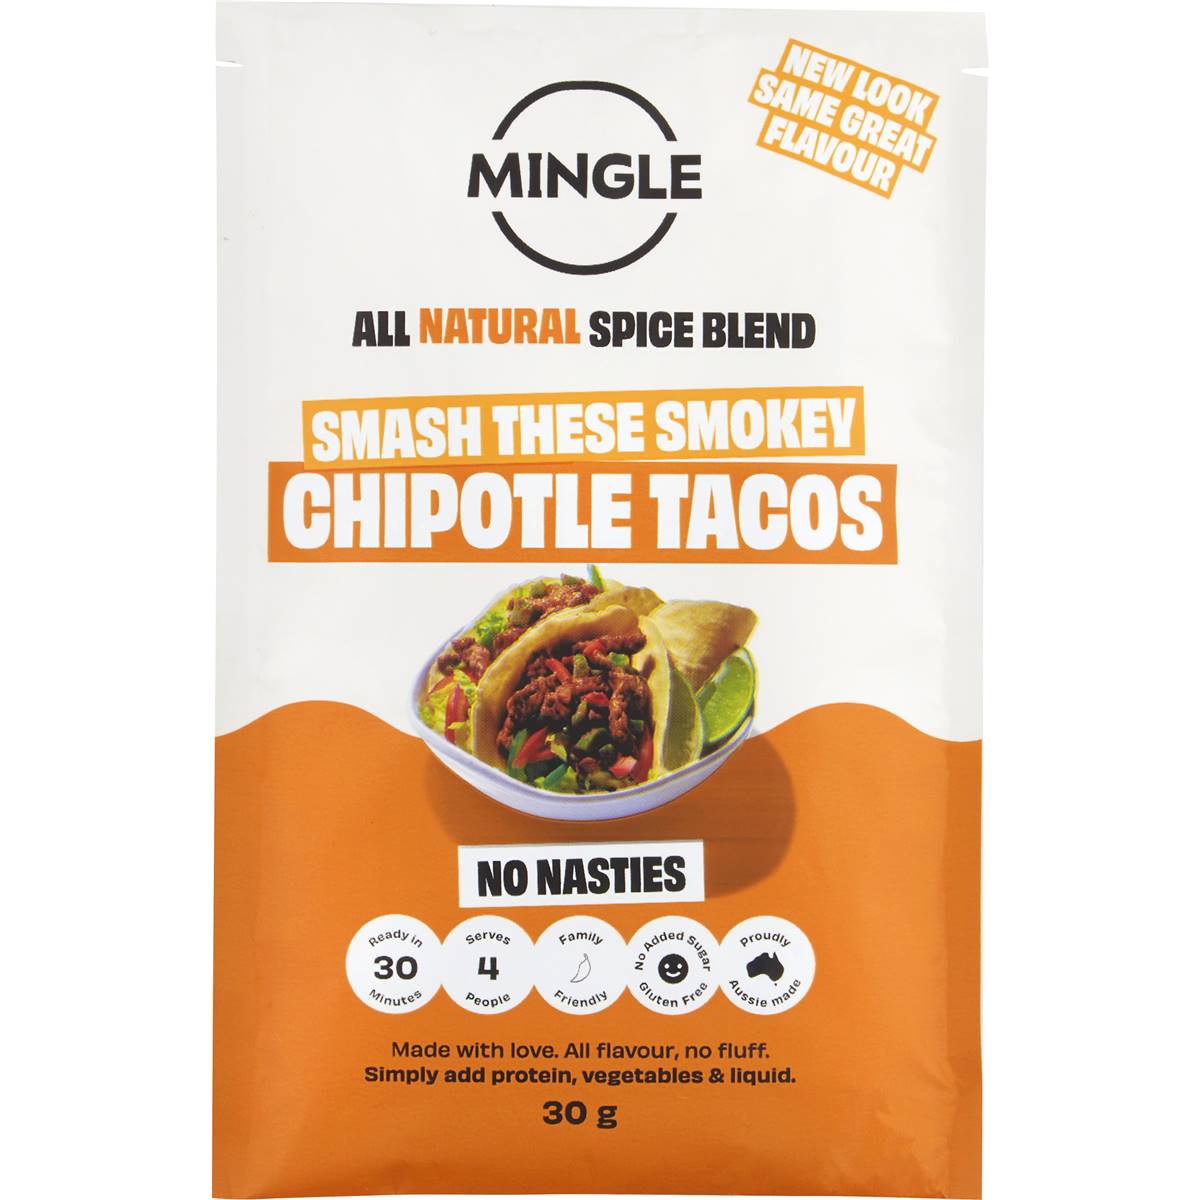 Calories in Mingle Smokey Taco Mild Chipotle Spice Blend